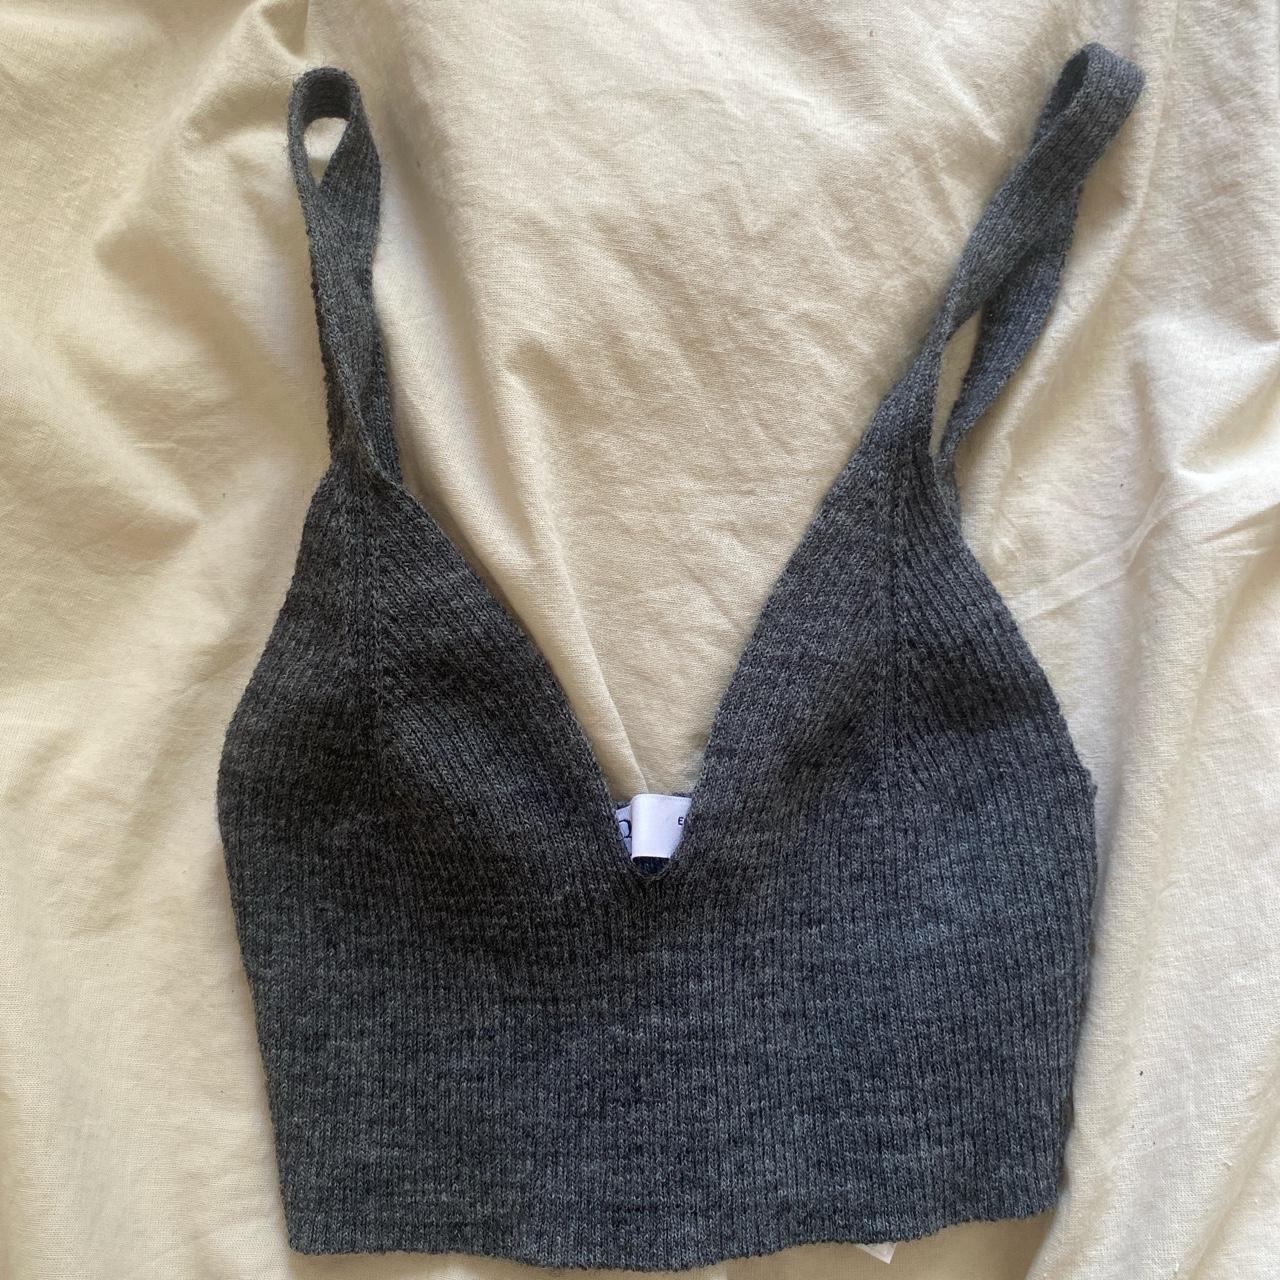 Zara knitted crop top 🖤 Size S Never worn! - Depop